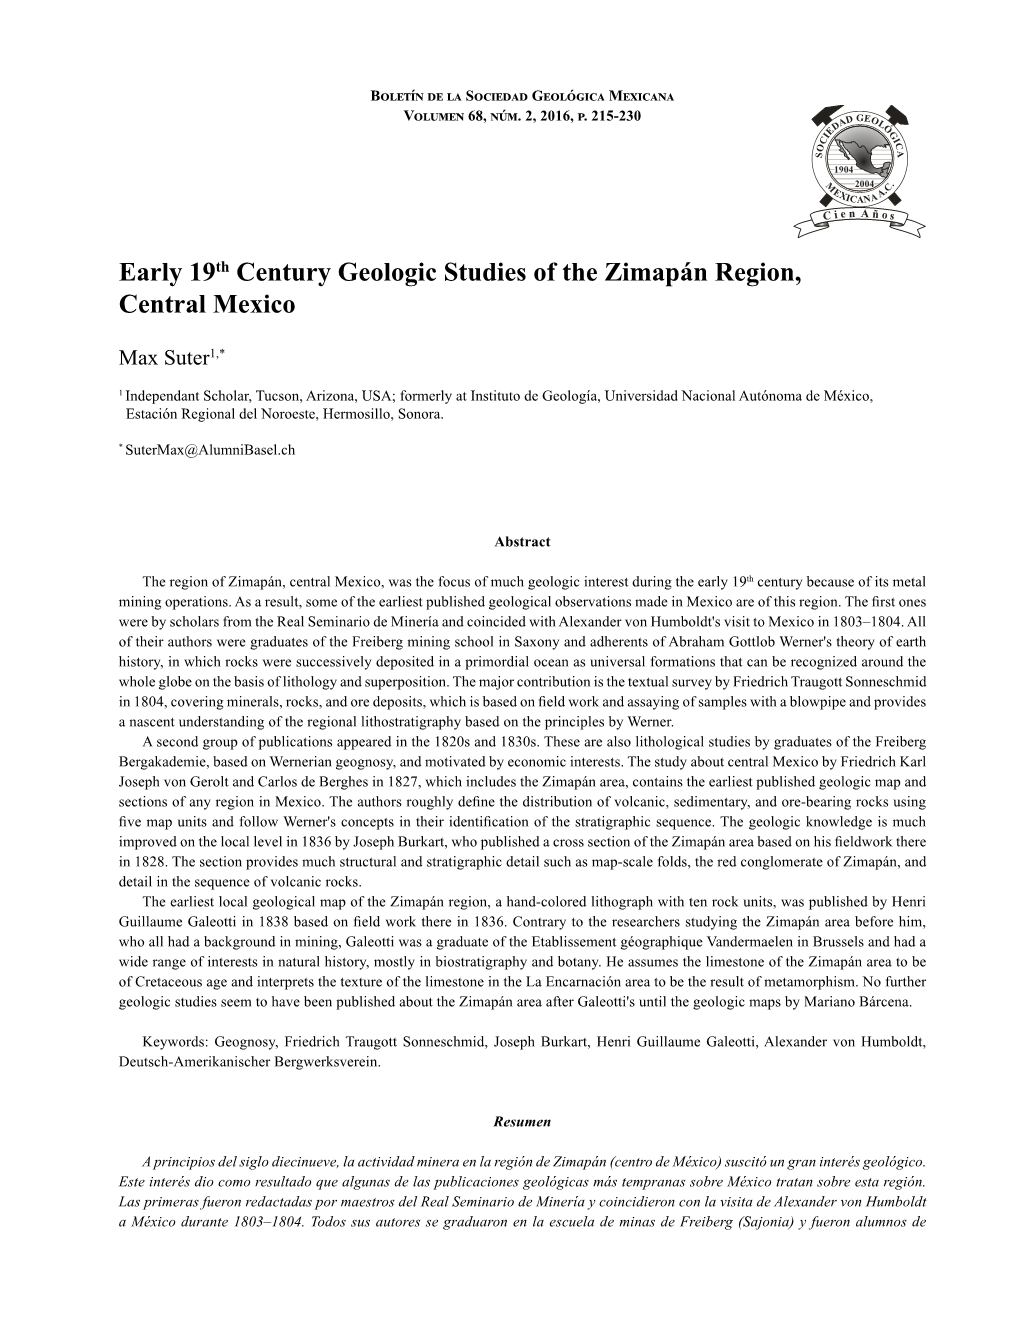 Early 19Th Century Geologic Studies of the Zimapán Region, Central Mexico